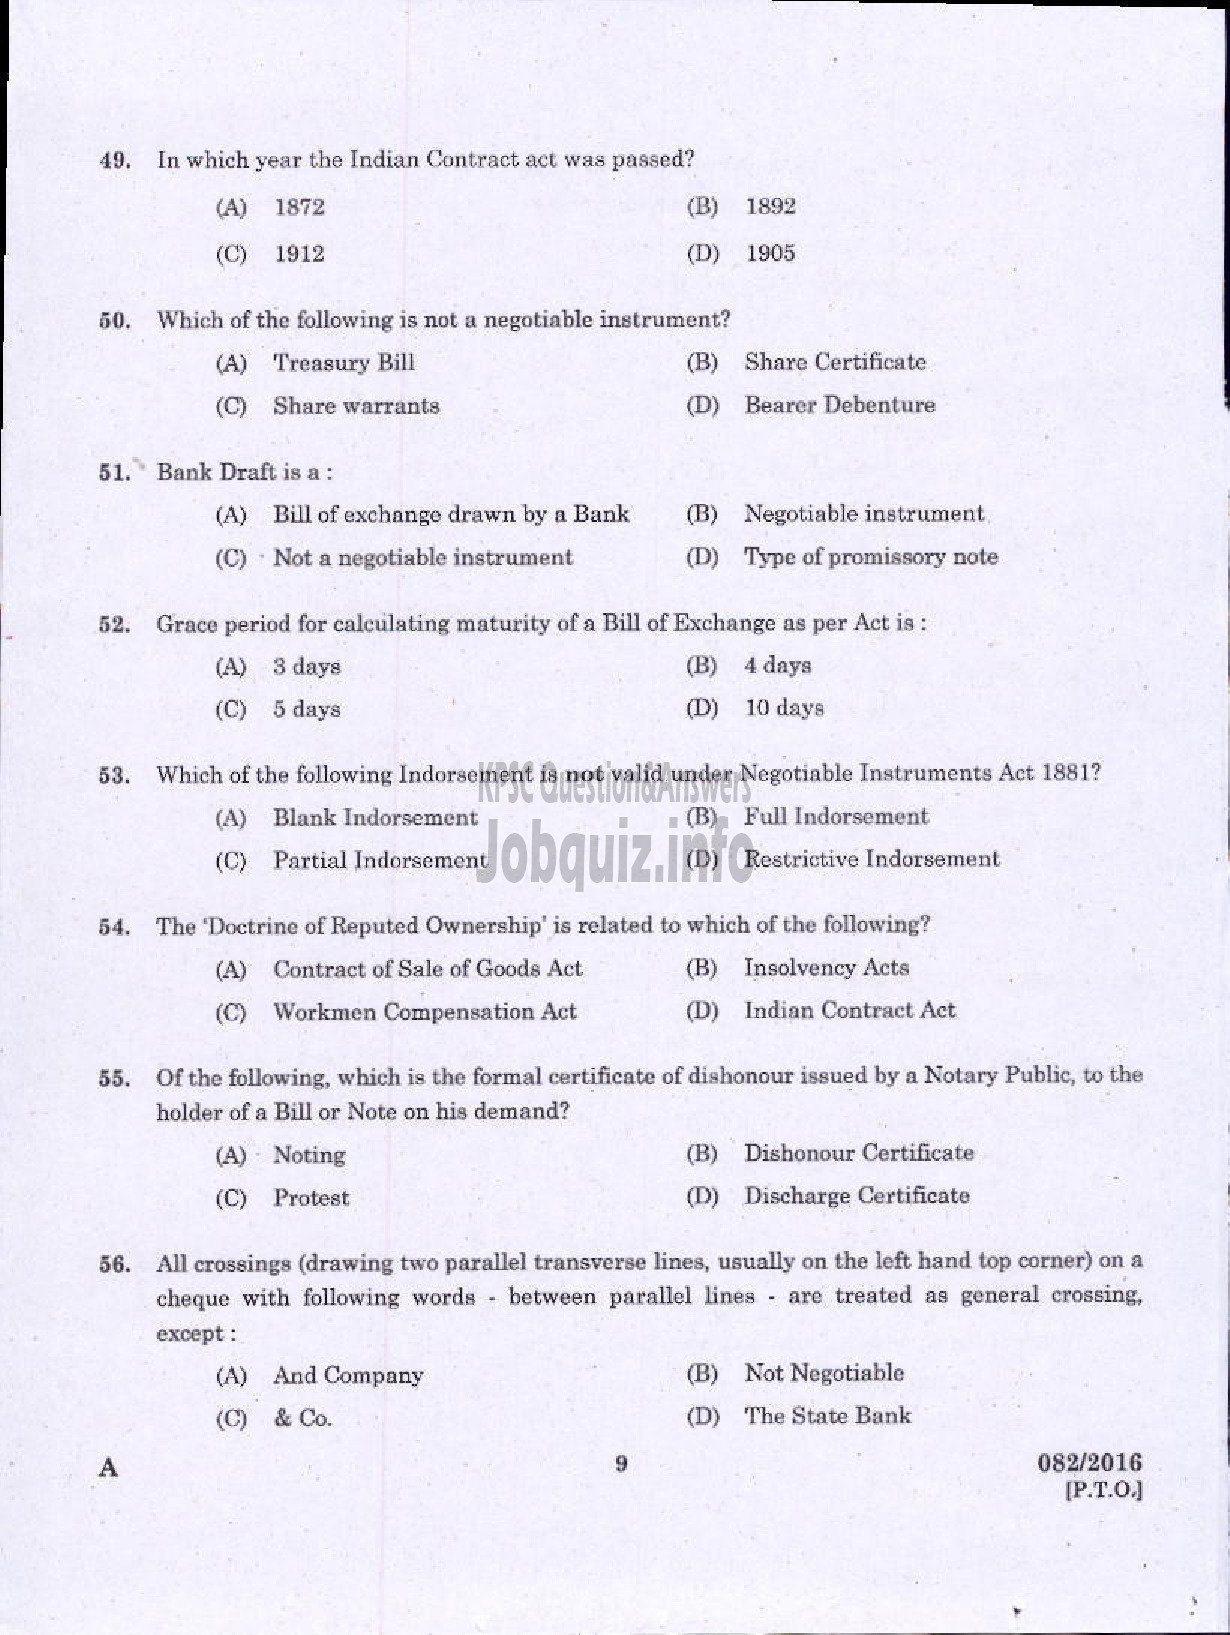 Kerala PSC Question Paper - ACCOUNTANT /JUNIOR ACCOUNTANT /ACCOUNTS ASSISTANT VARIOUS COMPANIES/CORPNS/BOARDS/SOCIETIES-7